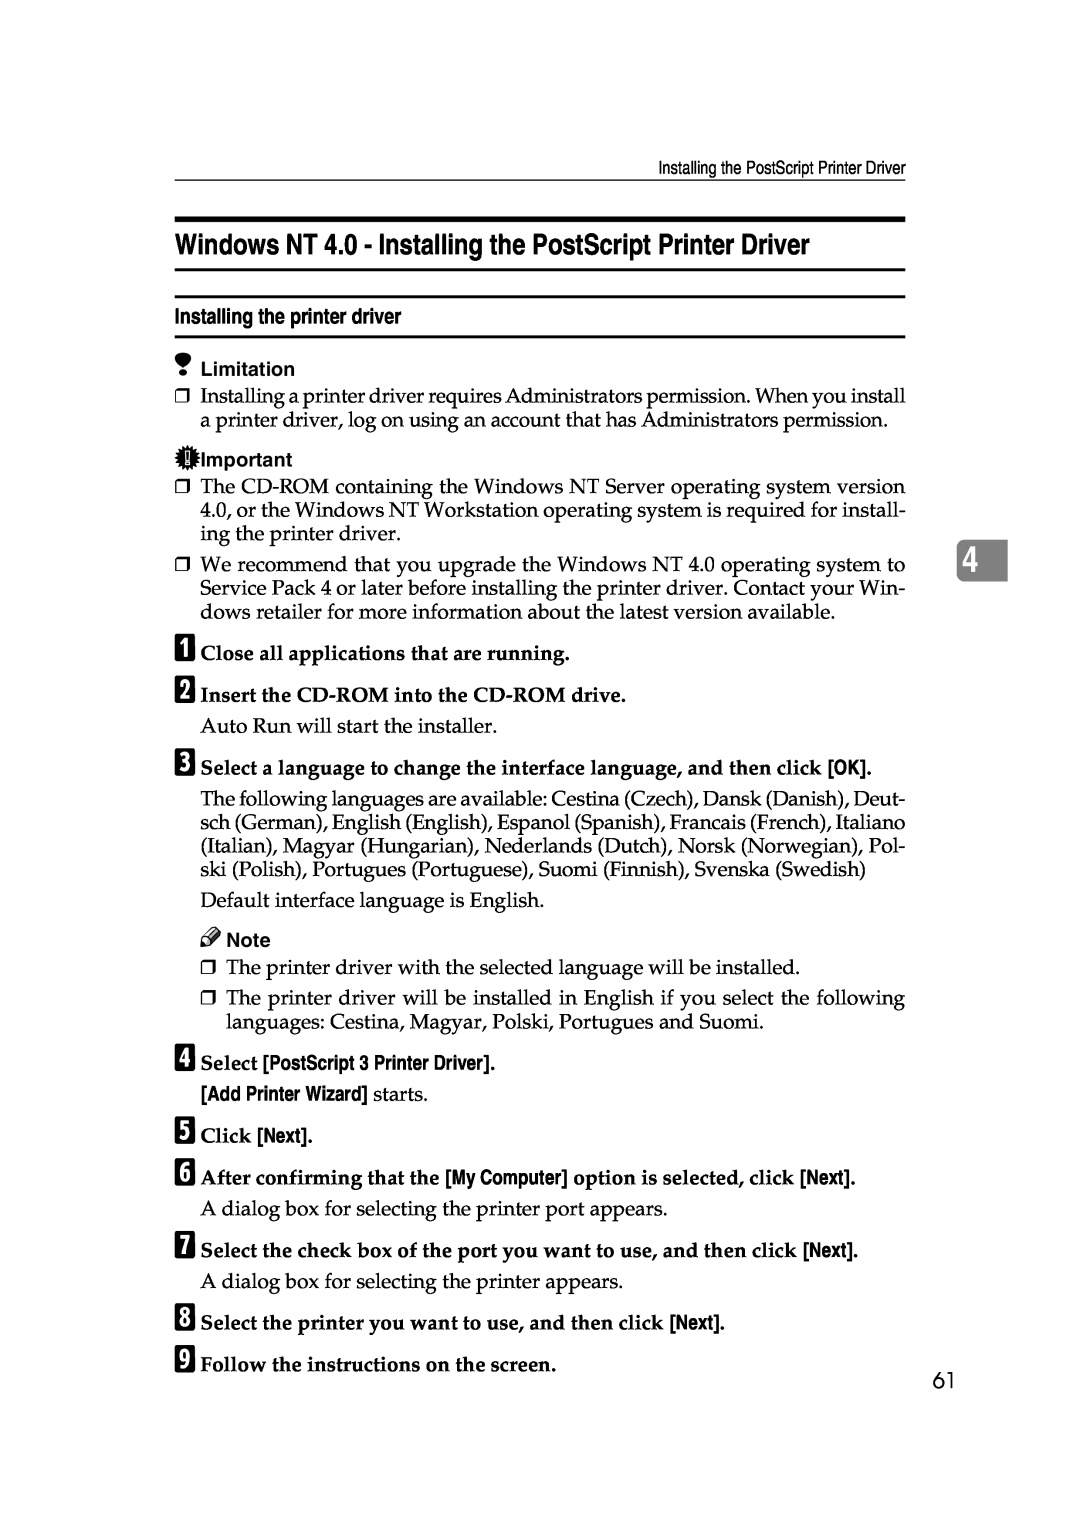 Ricoh AP2610, Type B Windows NT 4.0 - Installing the PostScript Printer Driver, Installing the printer driver, Limitation 